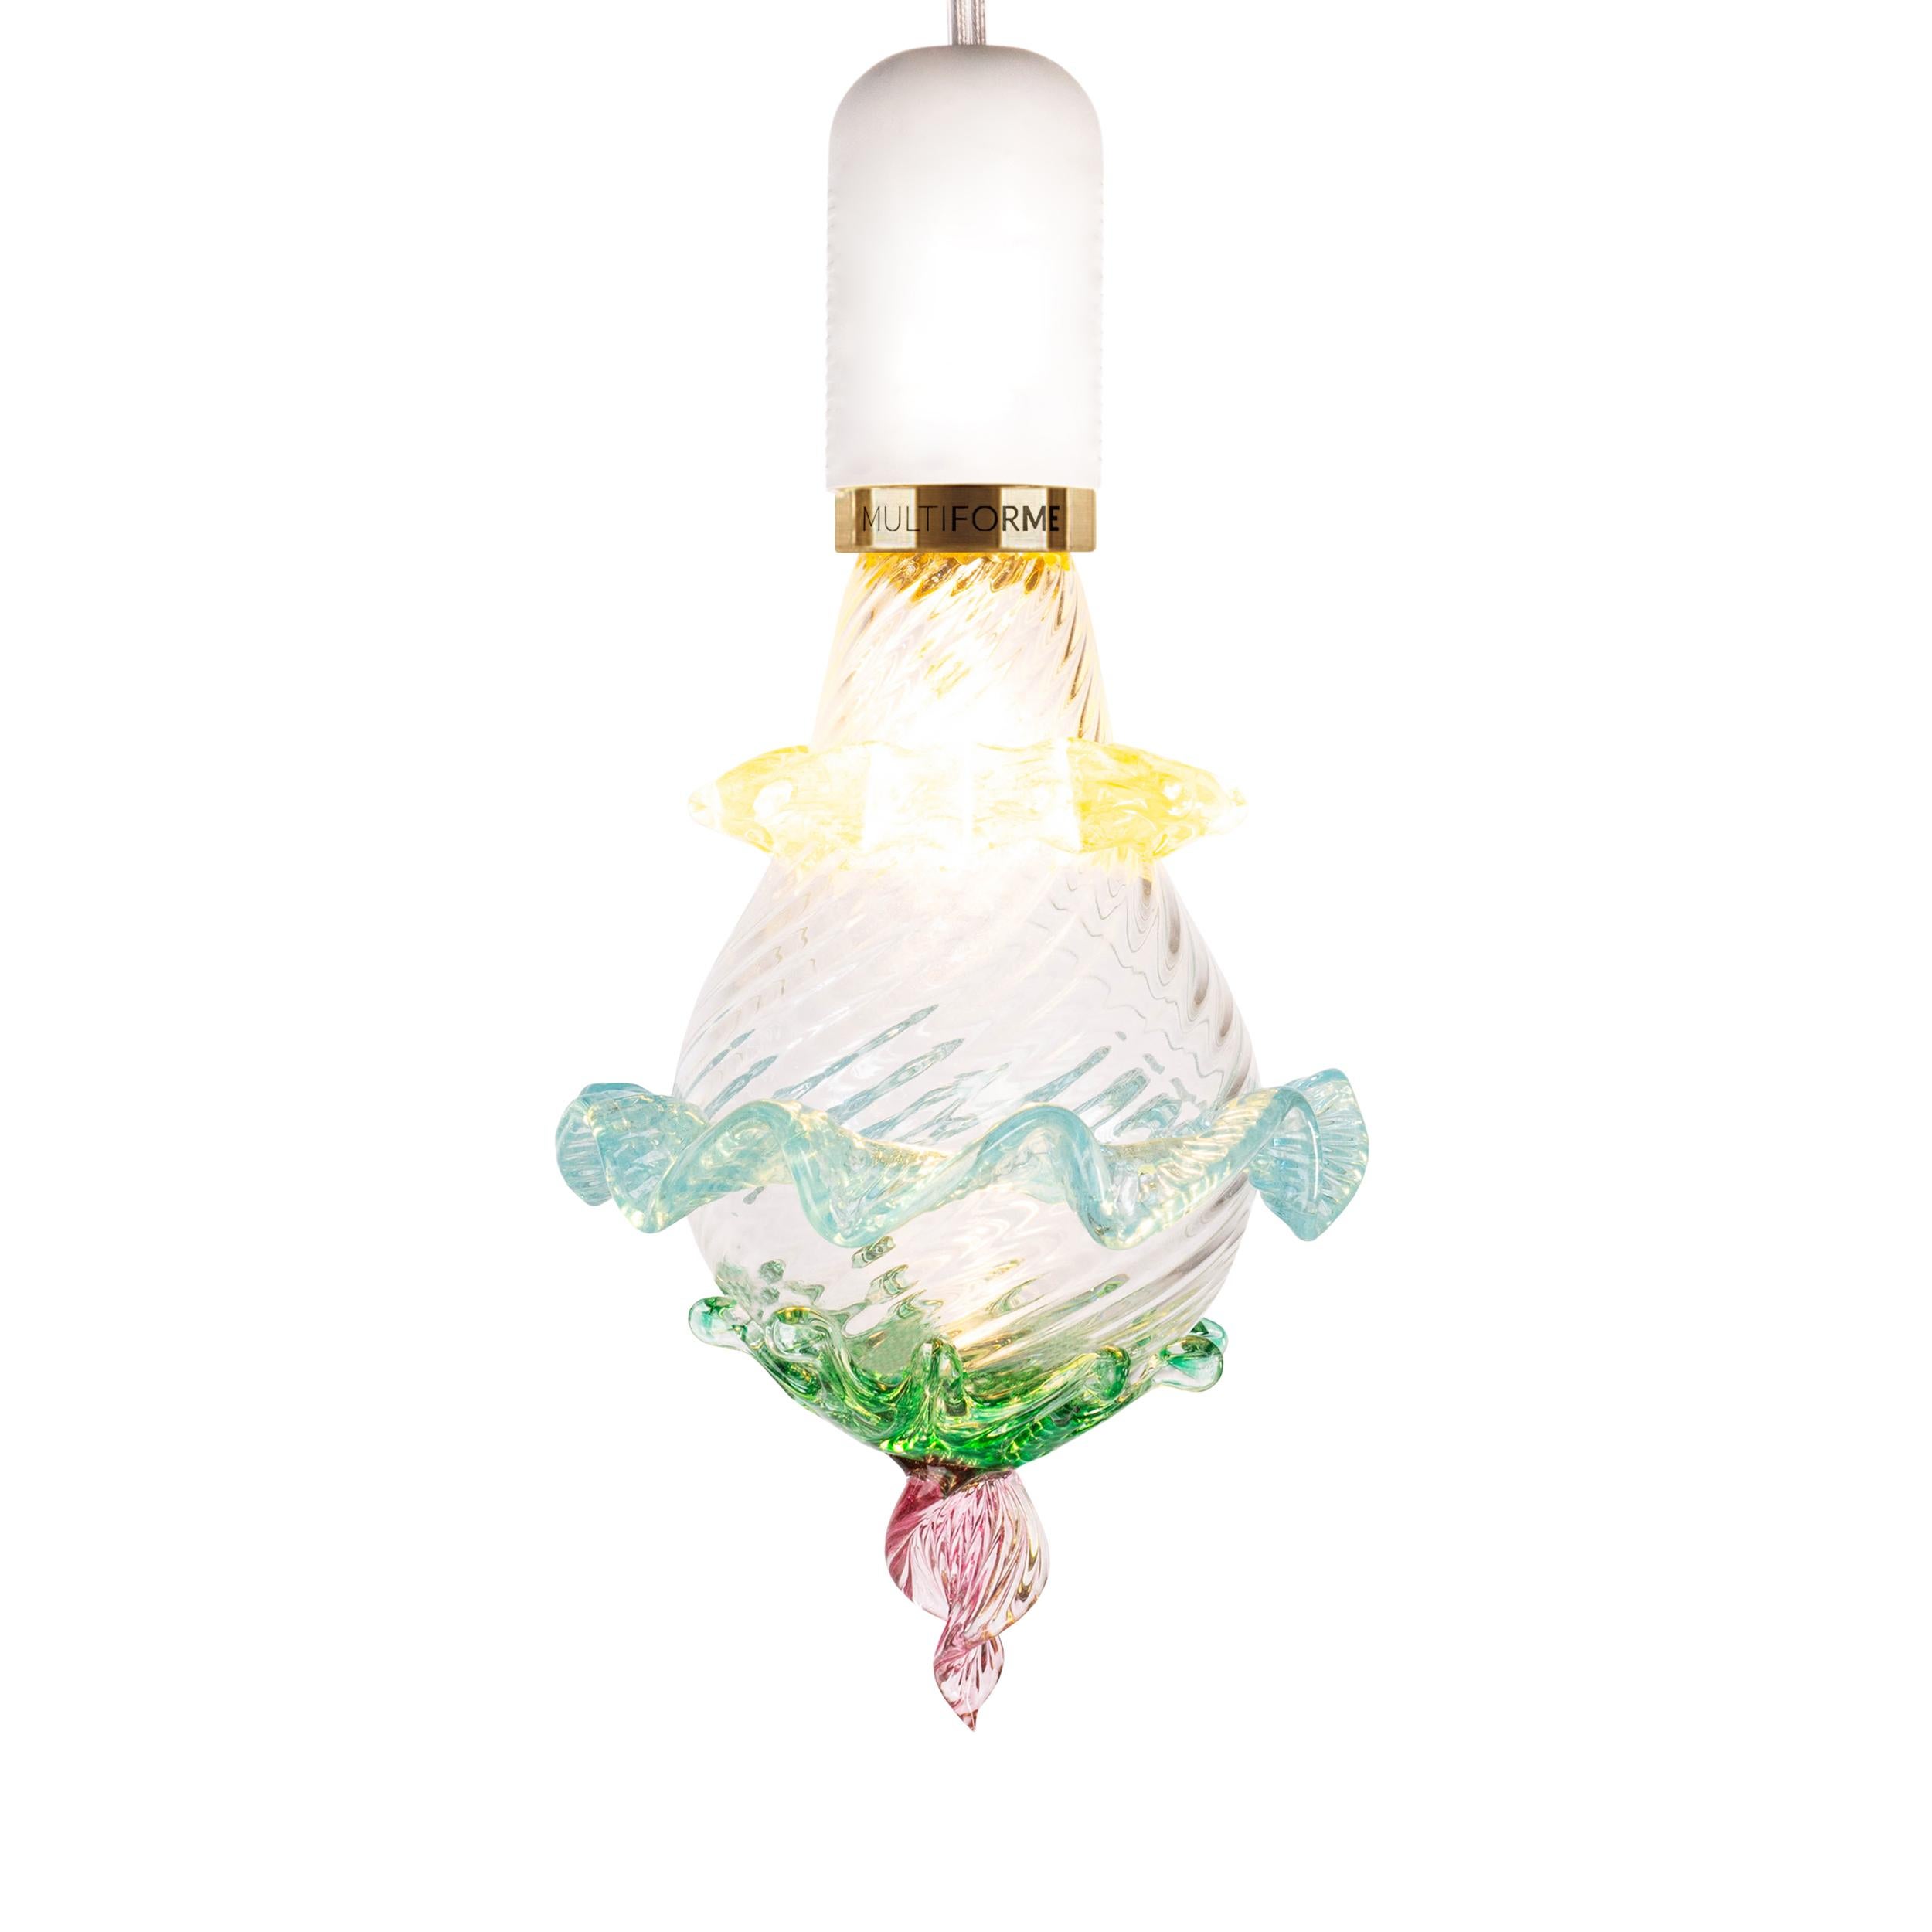 Artistic glass lightbulb chandelier Murano Bulb Marcantonio X Multiforme #03 In New Condition For Sale In Trebaseleghe, IT